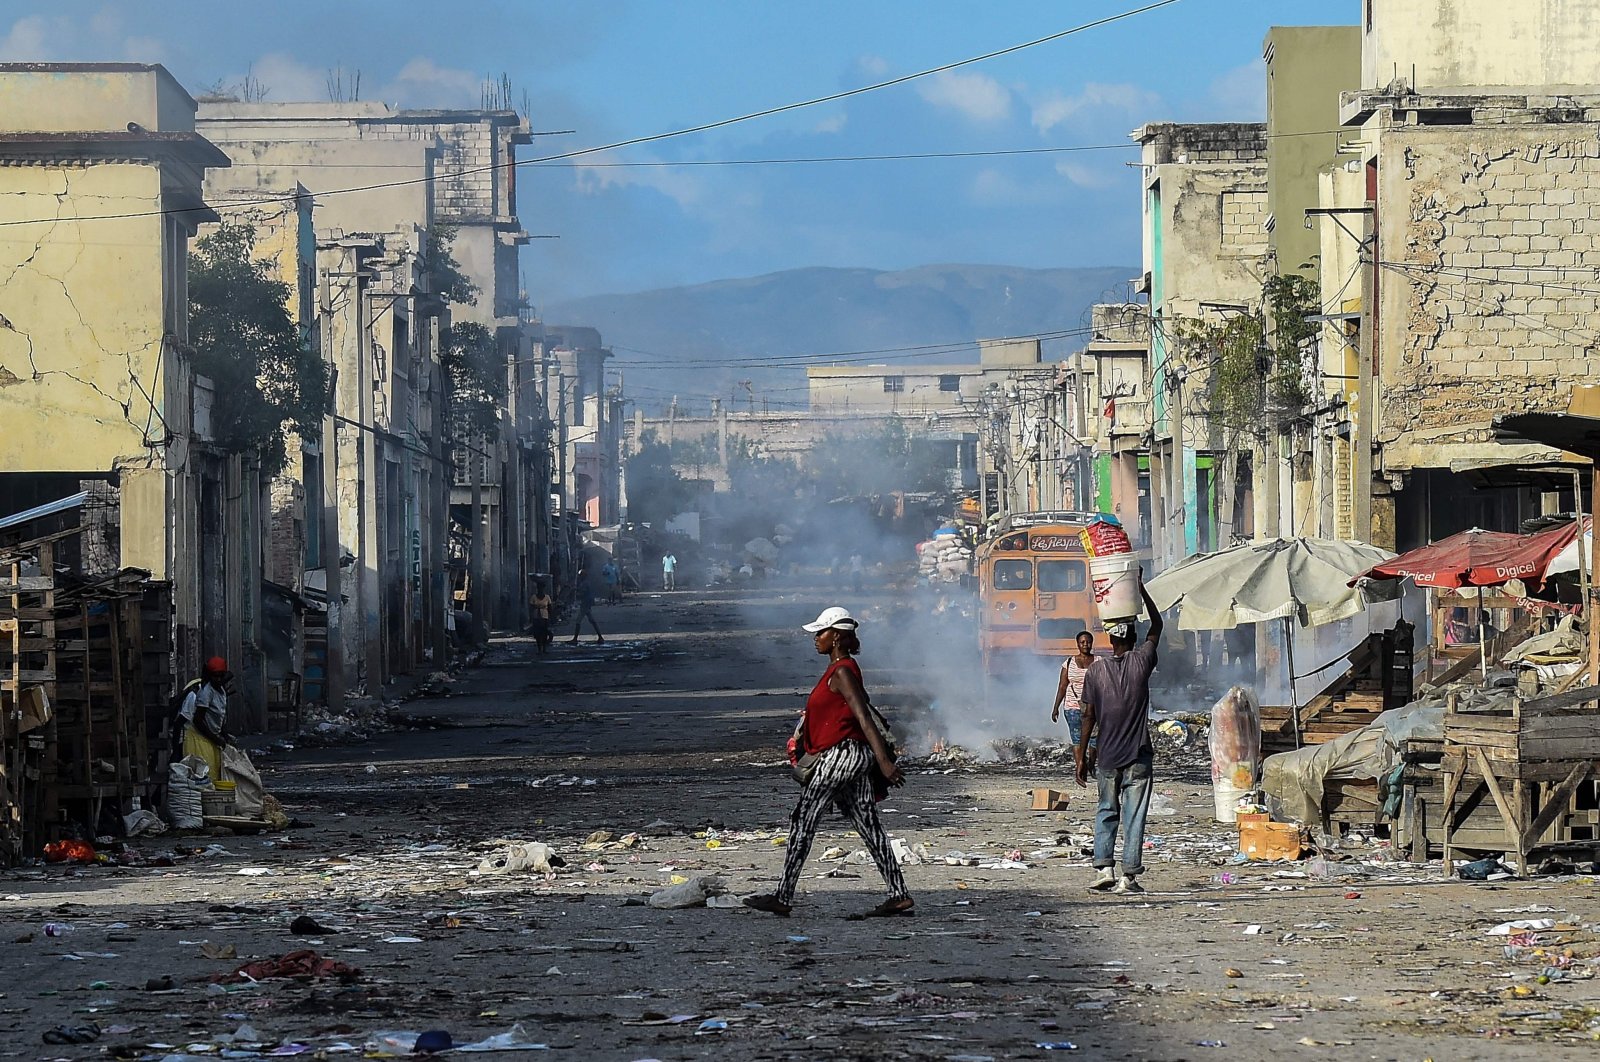 People walk on a deserted road ahead of gang shootings in downtown Port-au-Prince, Haiti, Dec. 20, 2019. (AFP Photo)